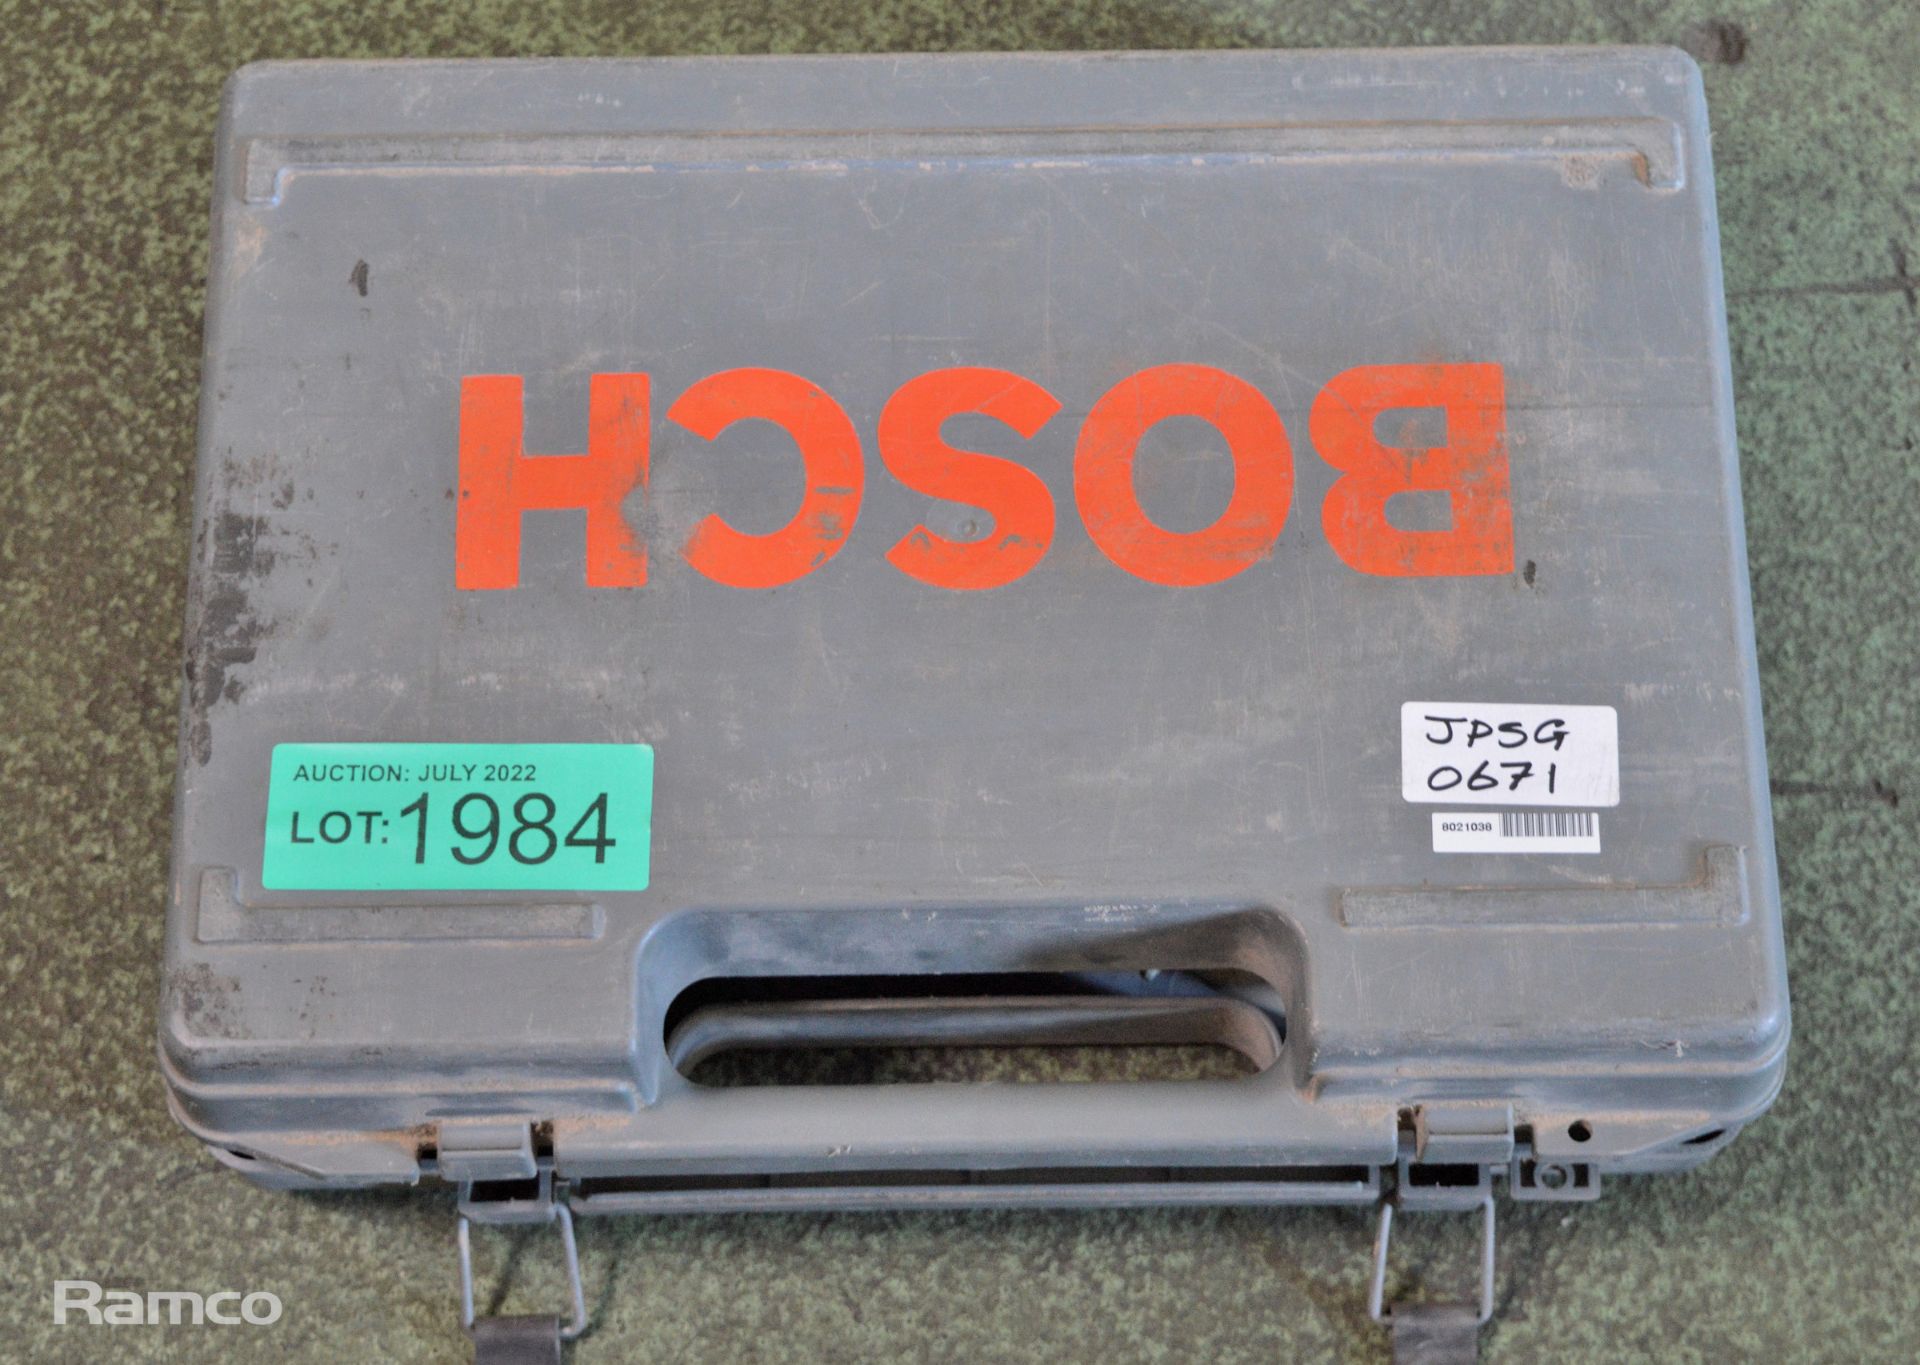 Bosch GST 85 PBE jigsaw - Image 5 of 5